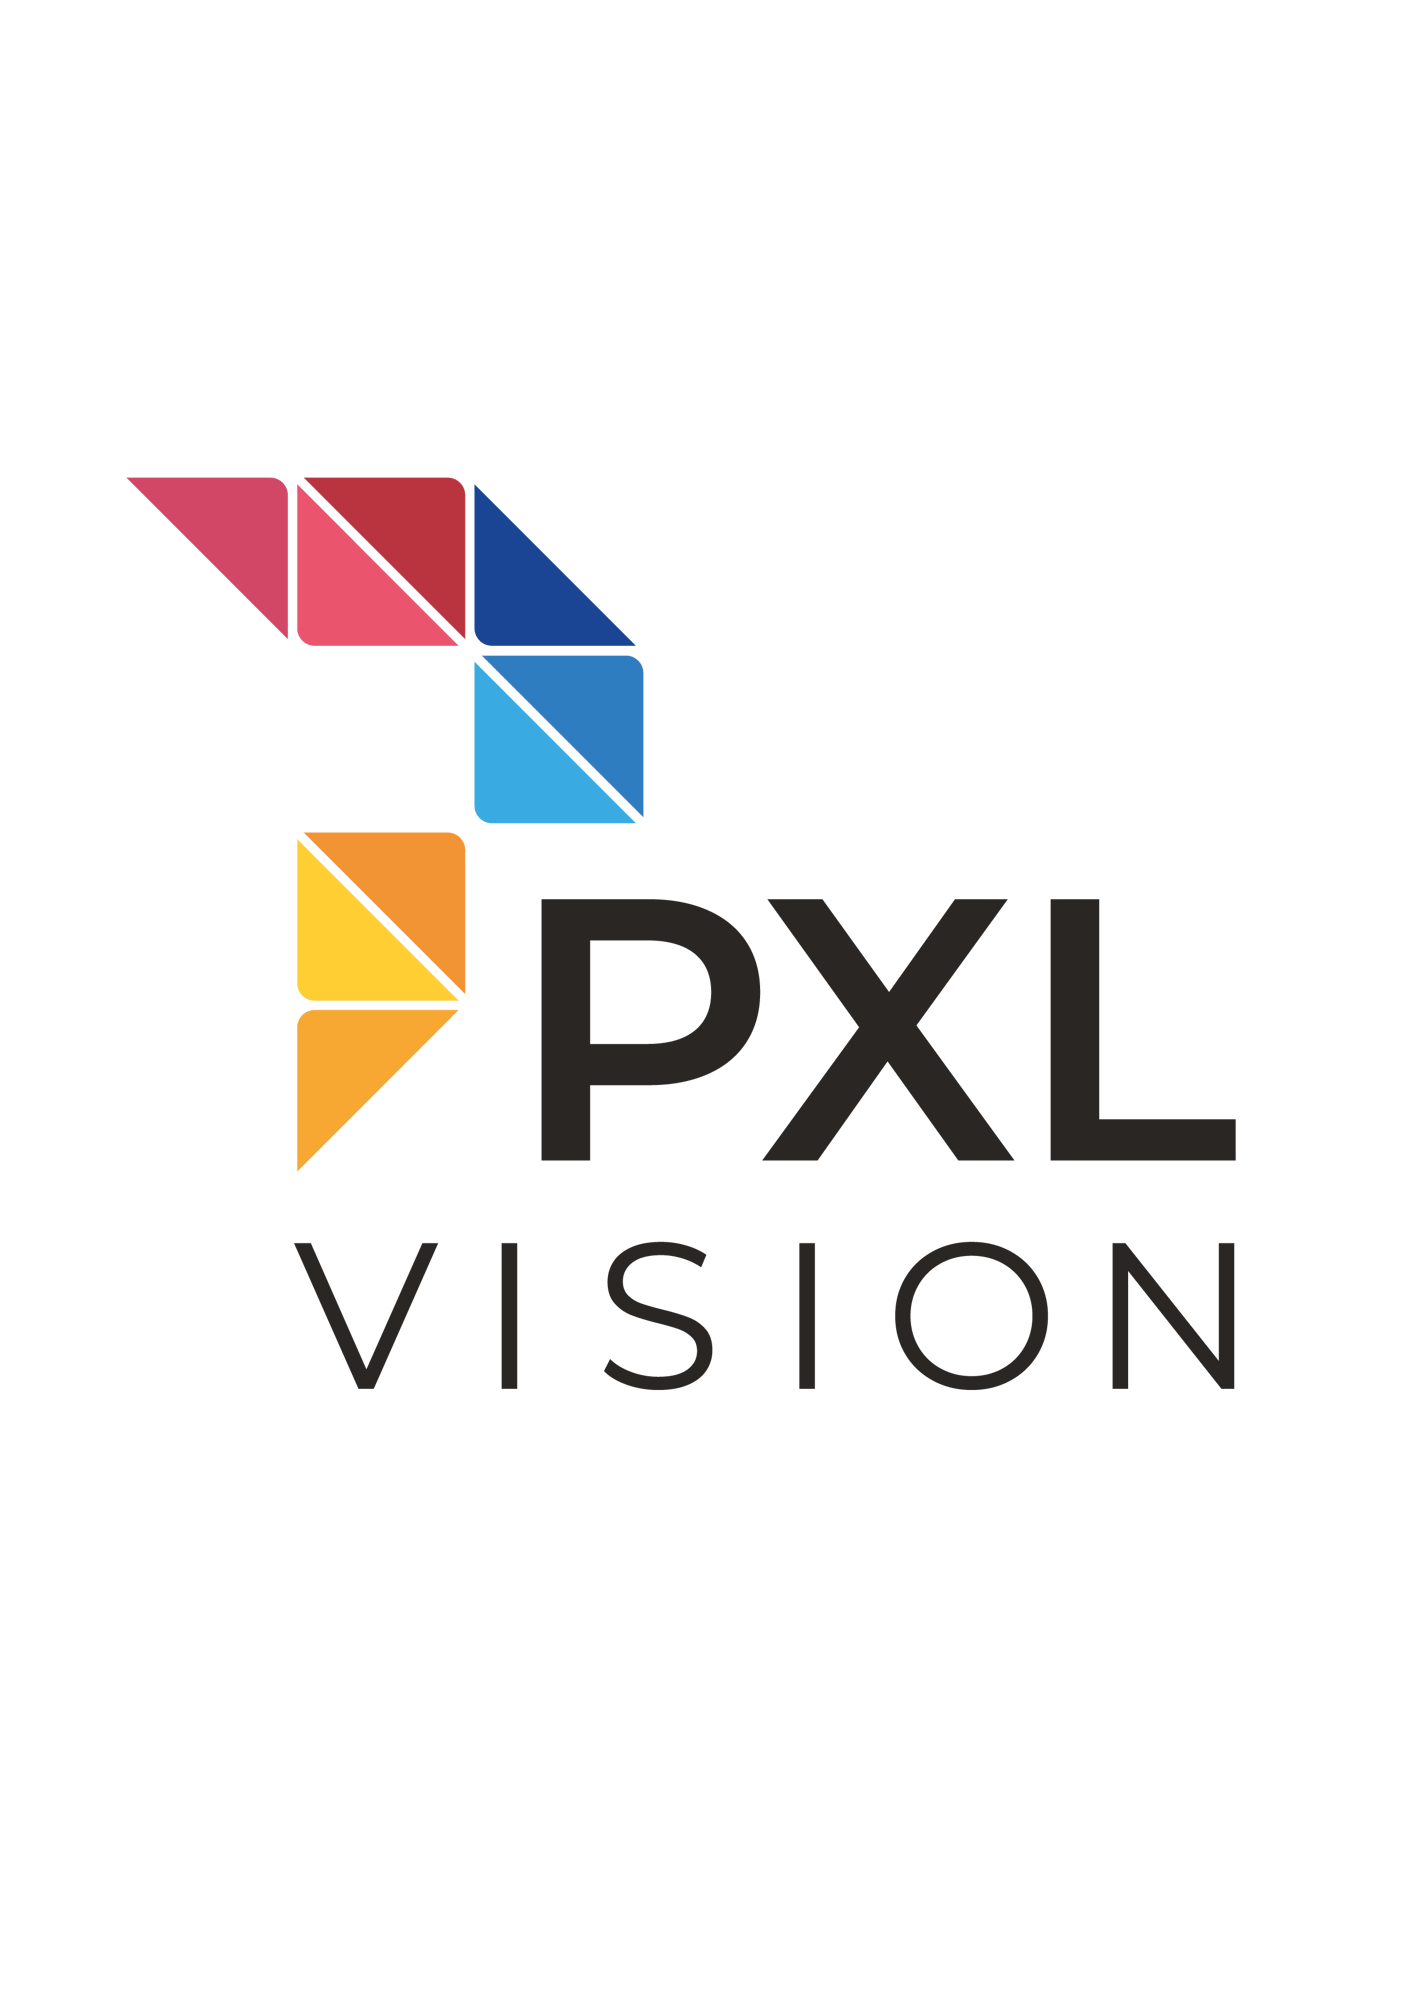 Logo_PXL Vision_Colorful